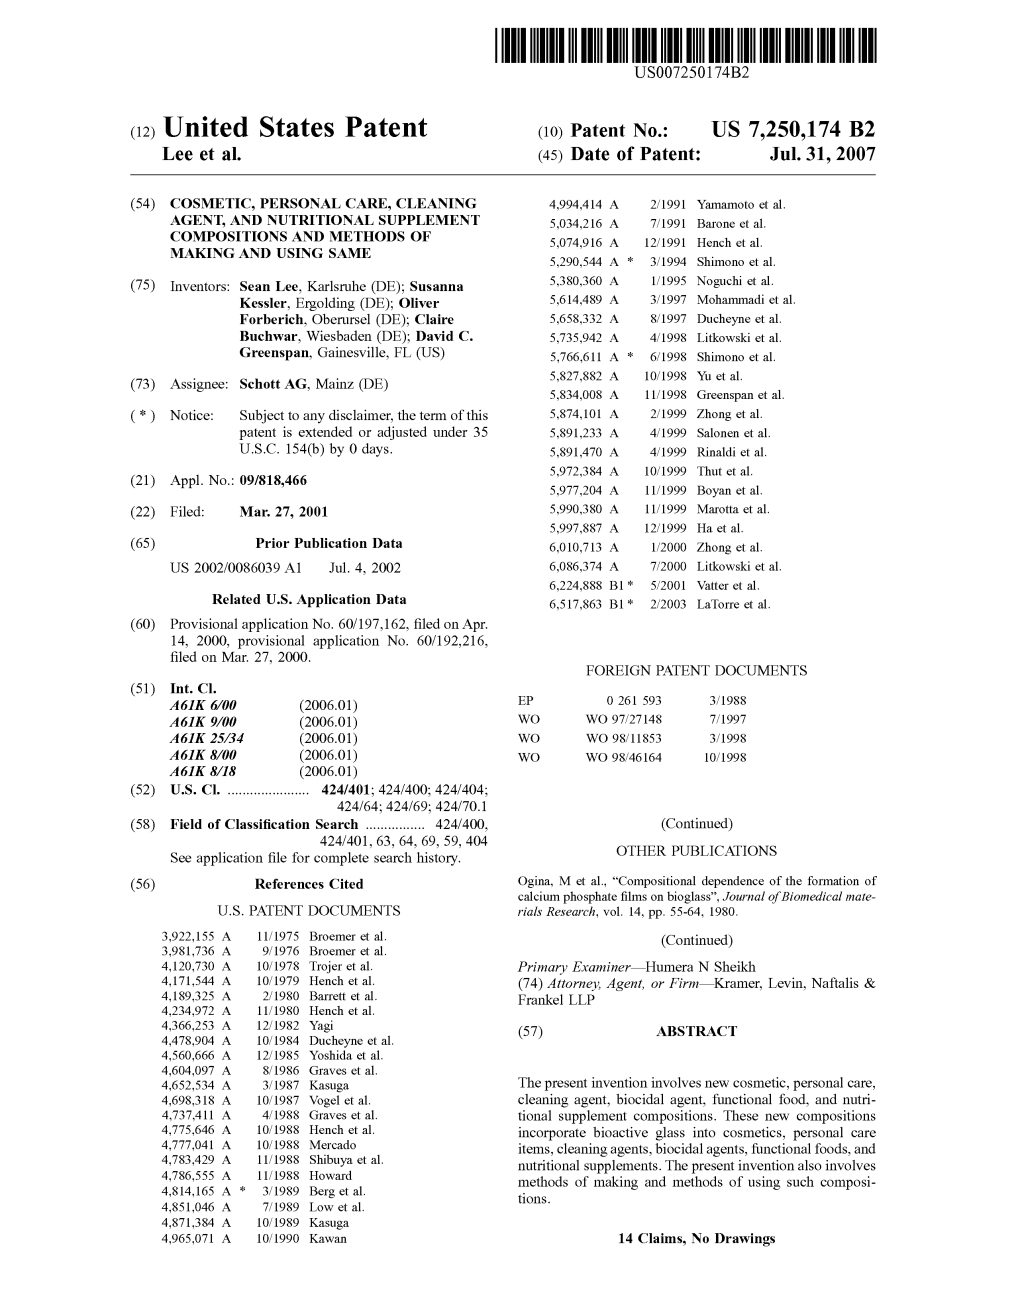 United States Patent (10) Patent N0.: US 7,250,174 B2 Lee Et Al